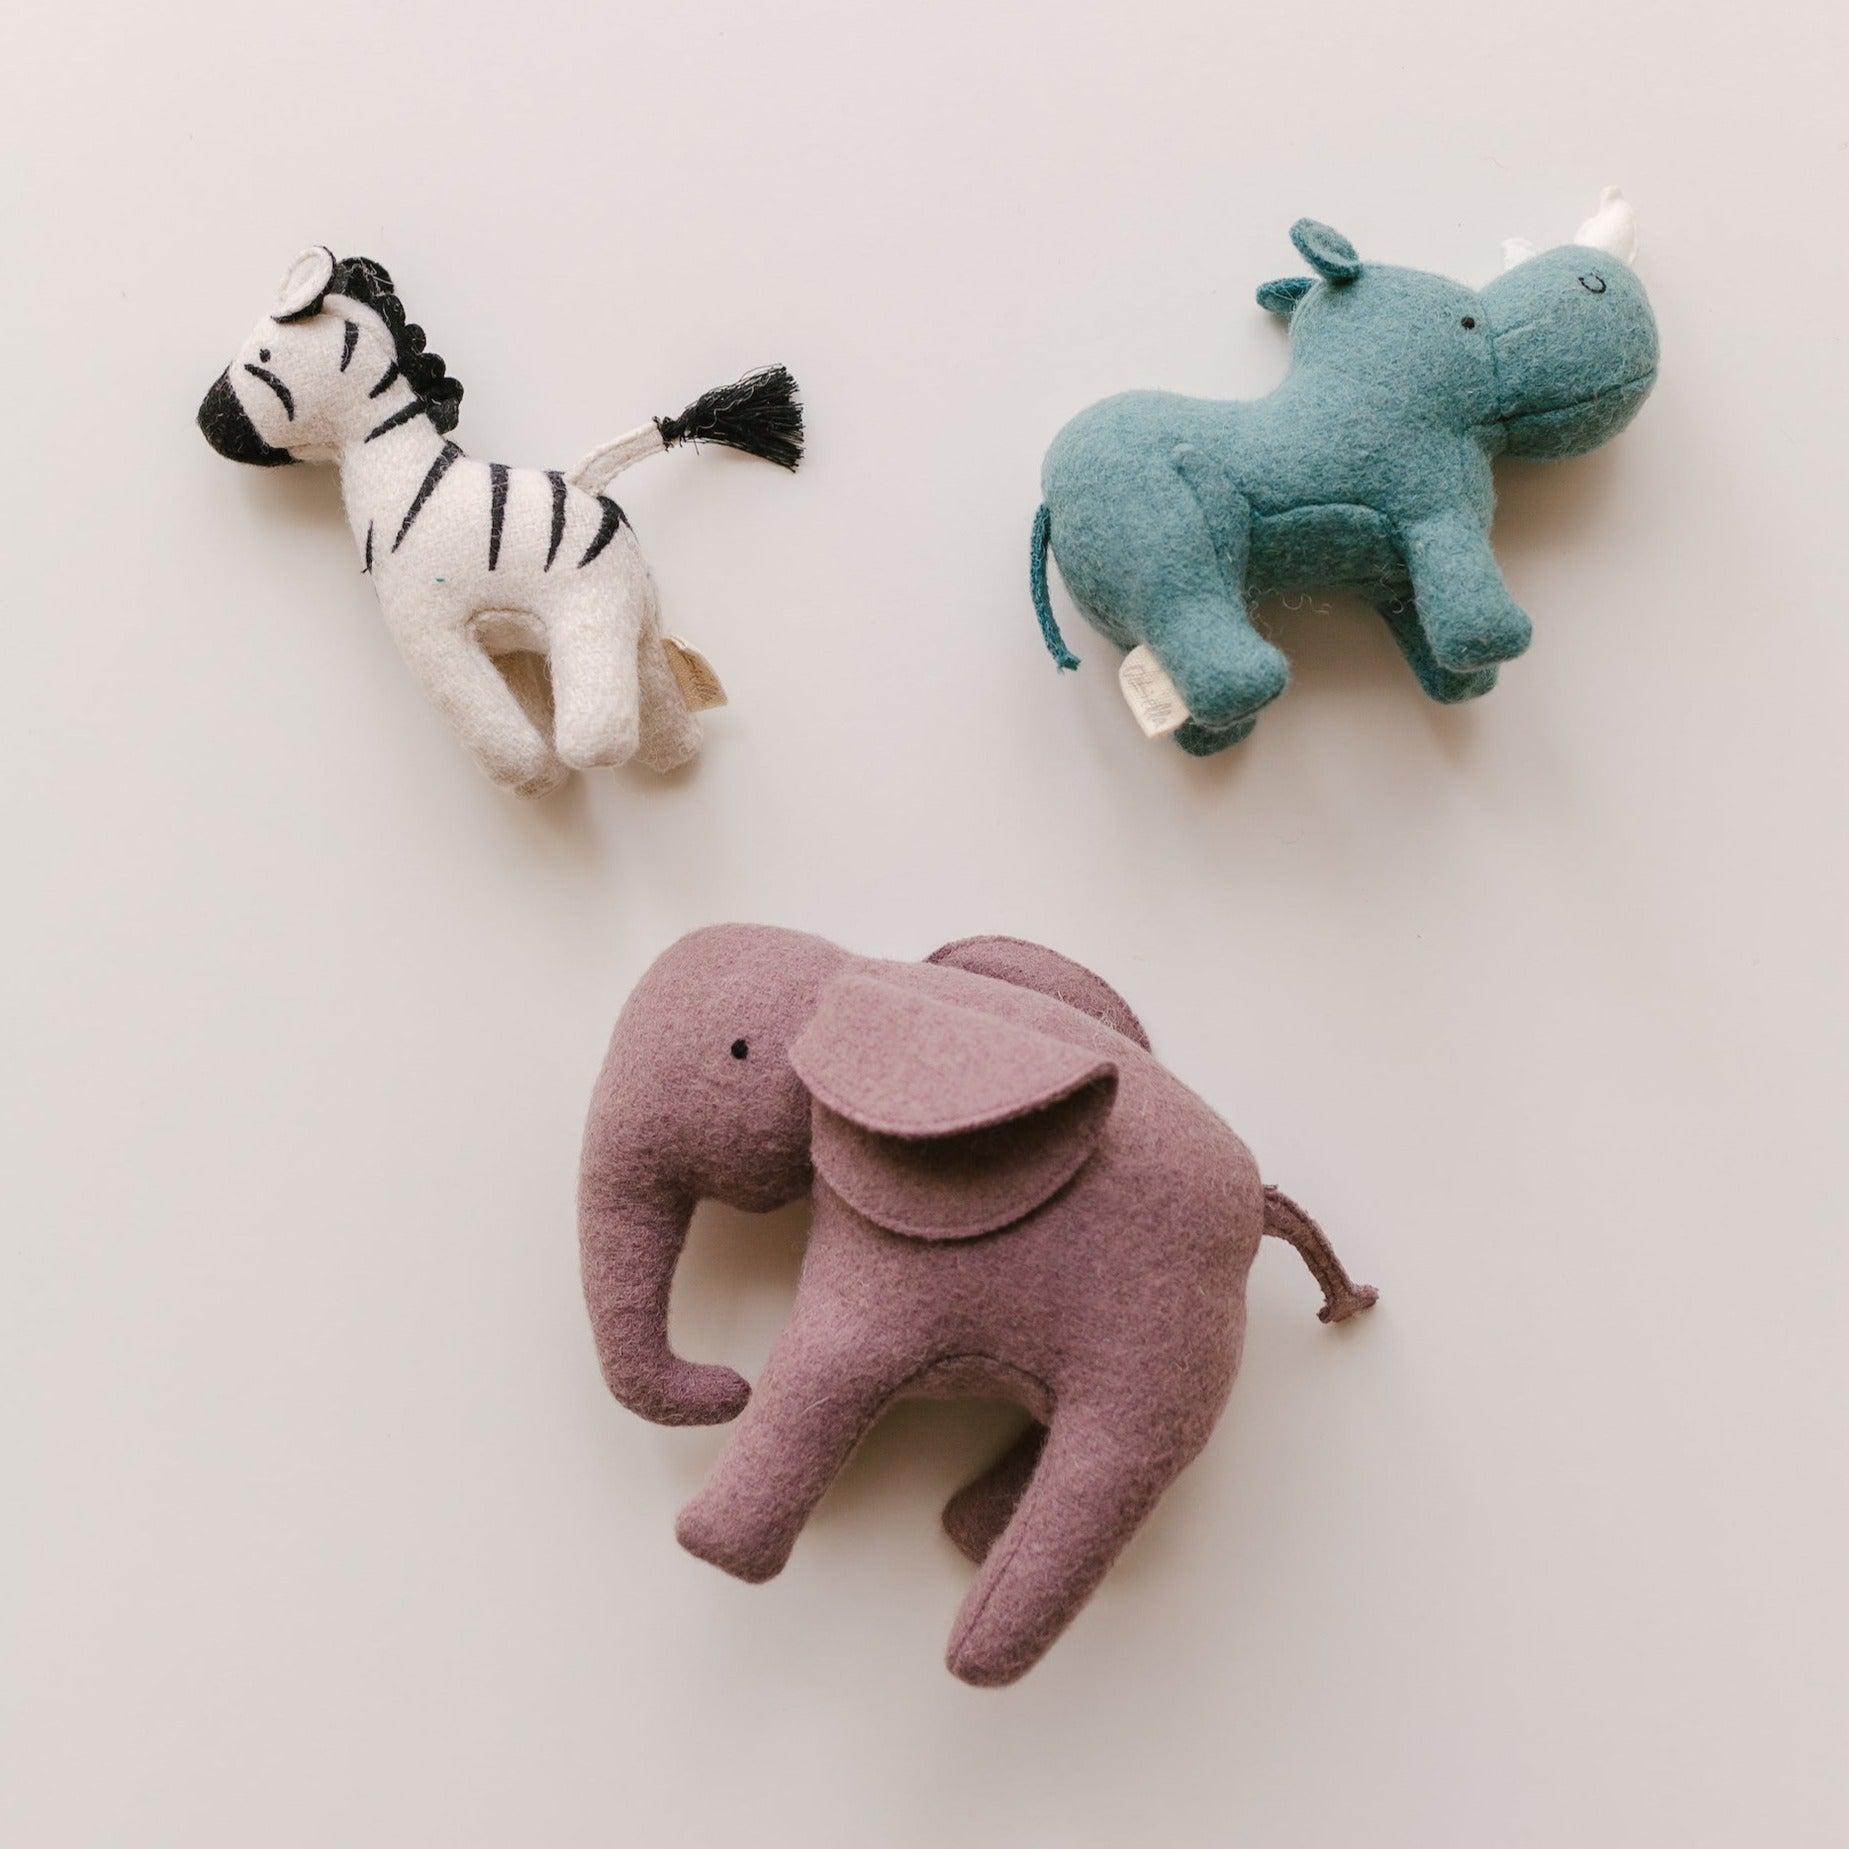 Olli Ella's Holdie Folk - Safari Animals are handmade safari-themed stuffed animals, including an elephant, zebra, and giraffe.